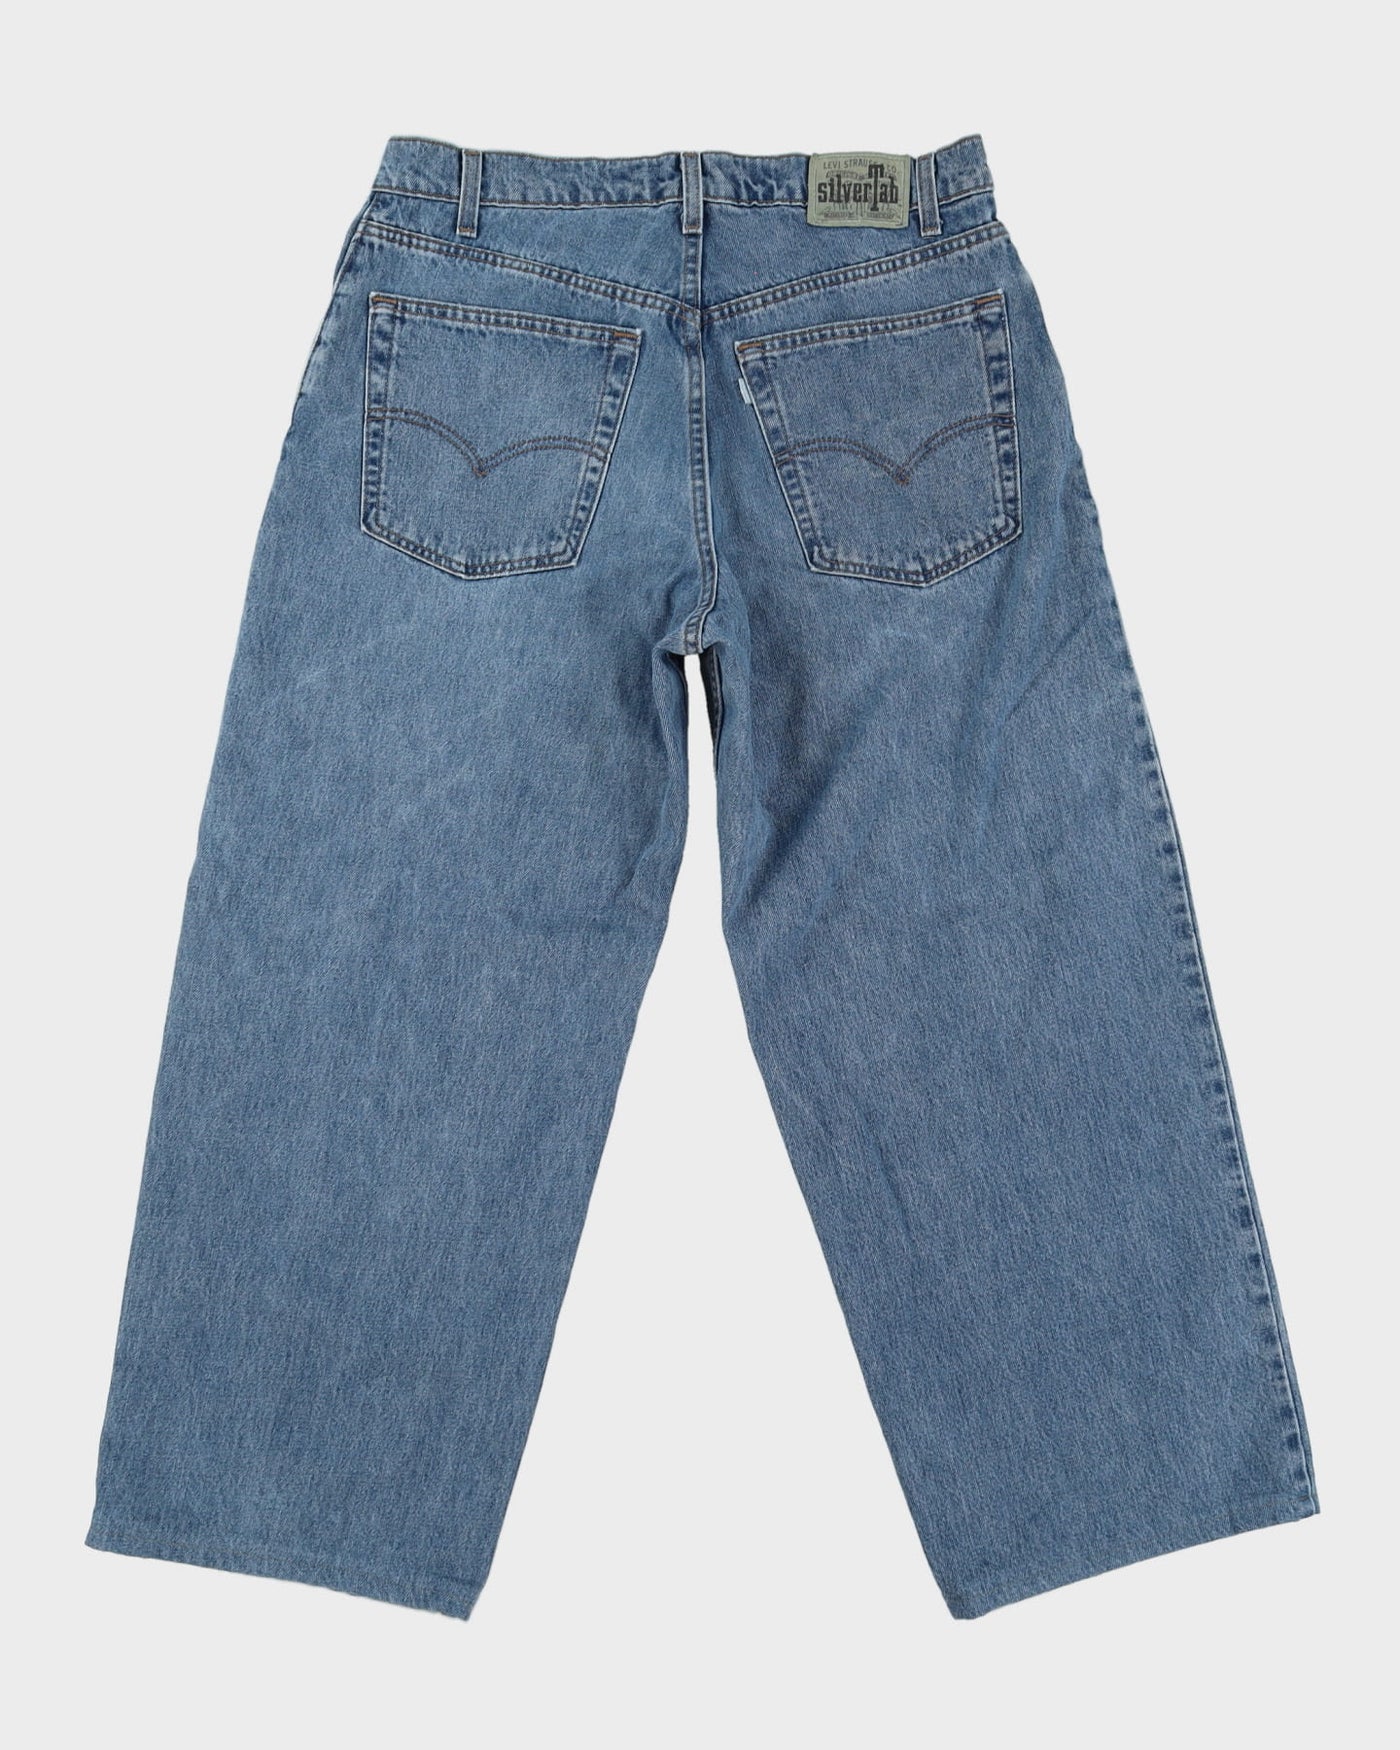 Vintage 90s Levi's SilverTab Baggy Medium Wash Blue Jeans - W34 L28